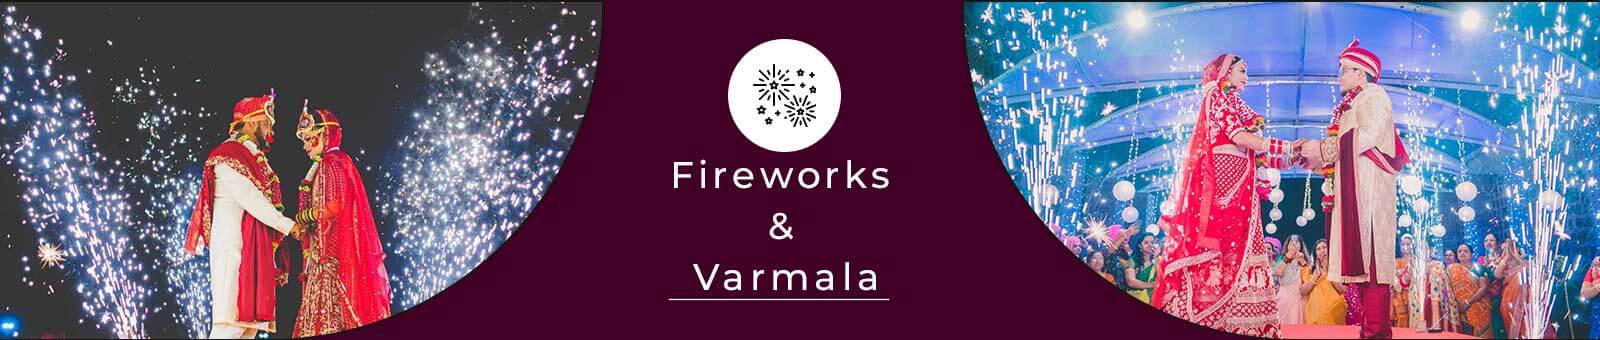 Vermala & Fireworks in Bangalore